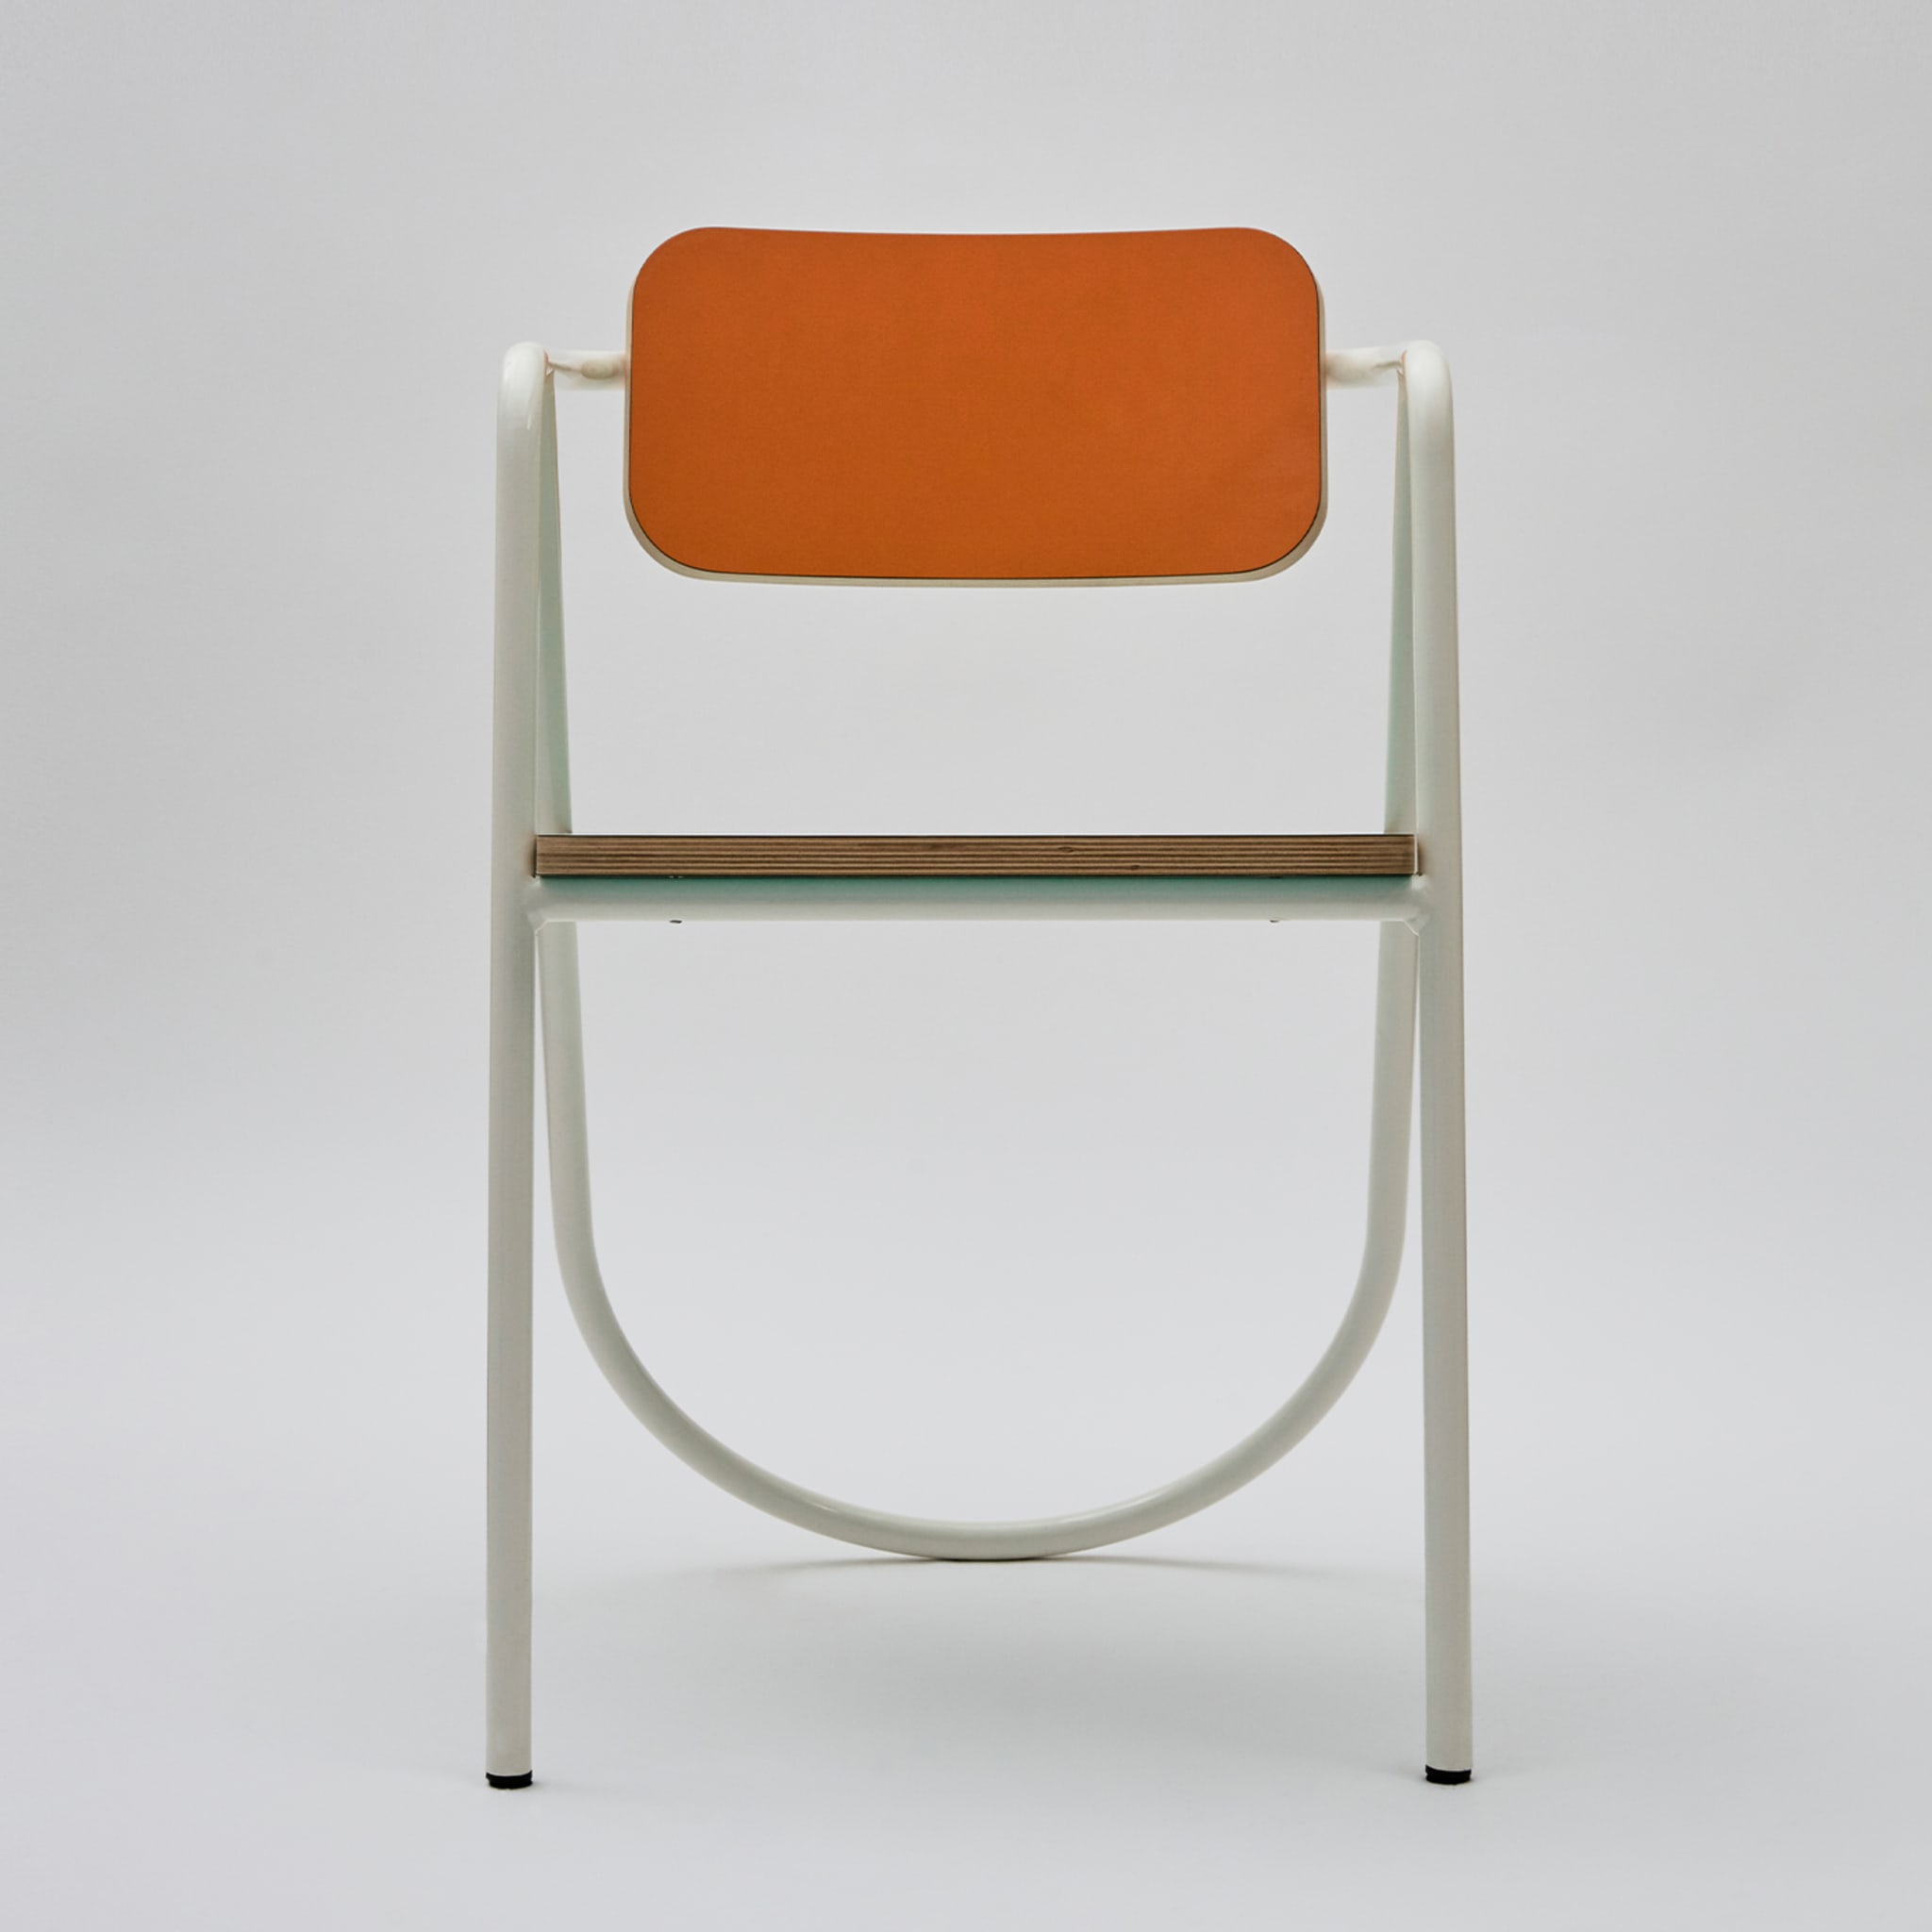 La Misciù White/Teal/Orange Chair  - Alternative view 1